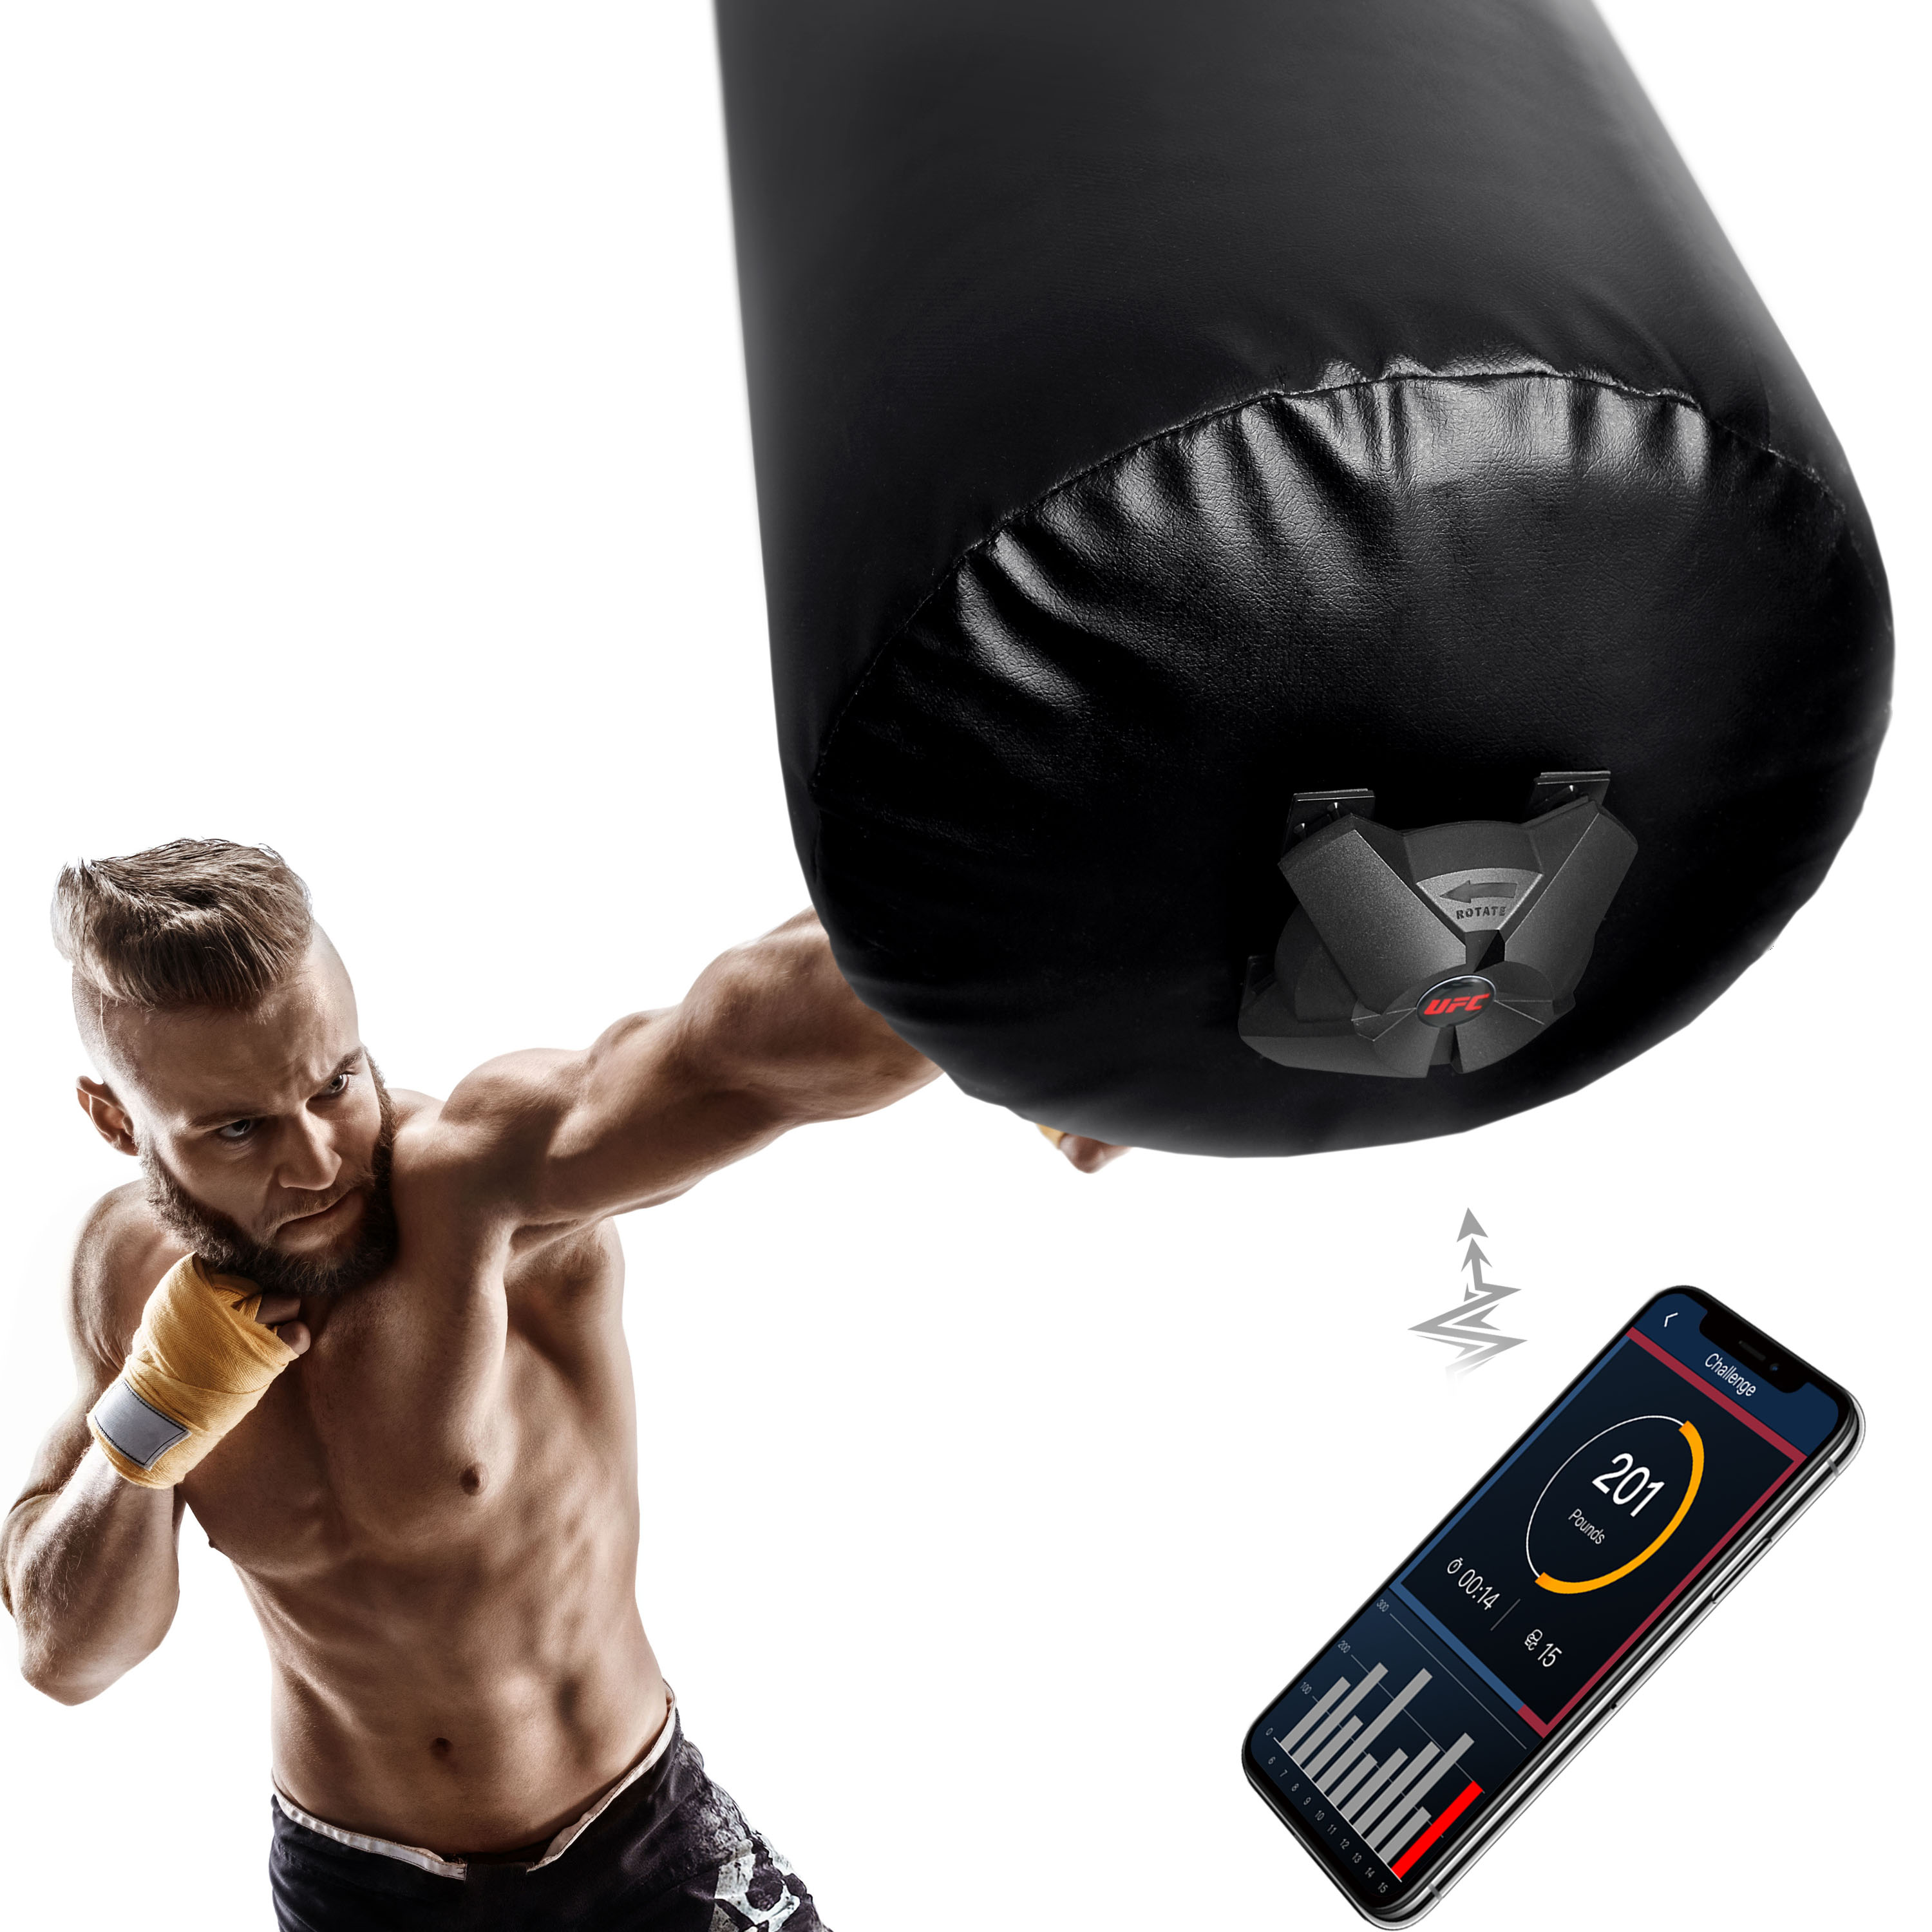 

UFC Force Tracker Combat Strike Heavy Bag Attachment balls